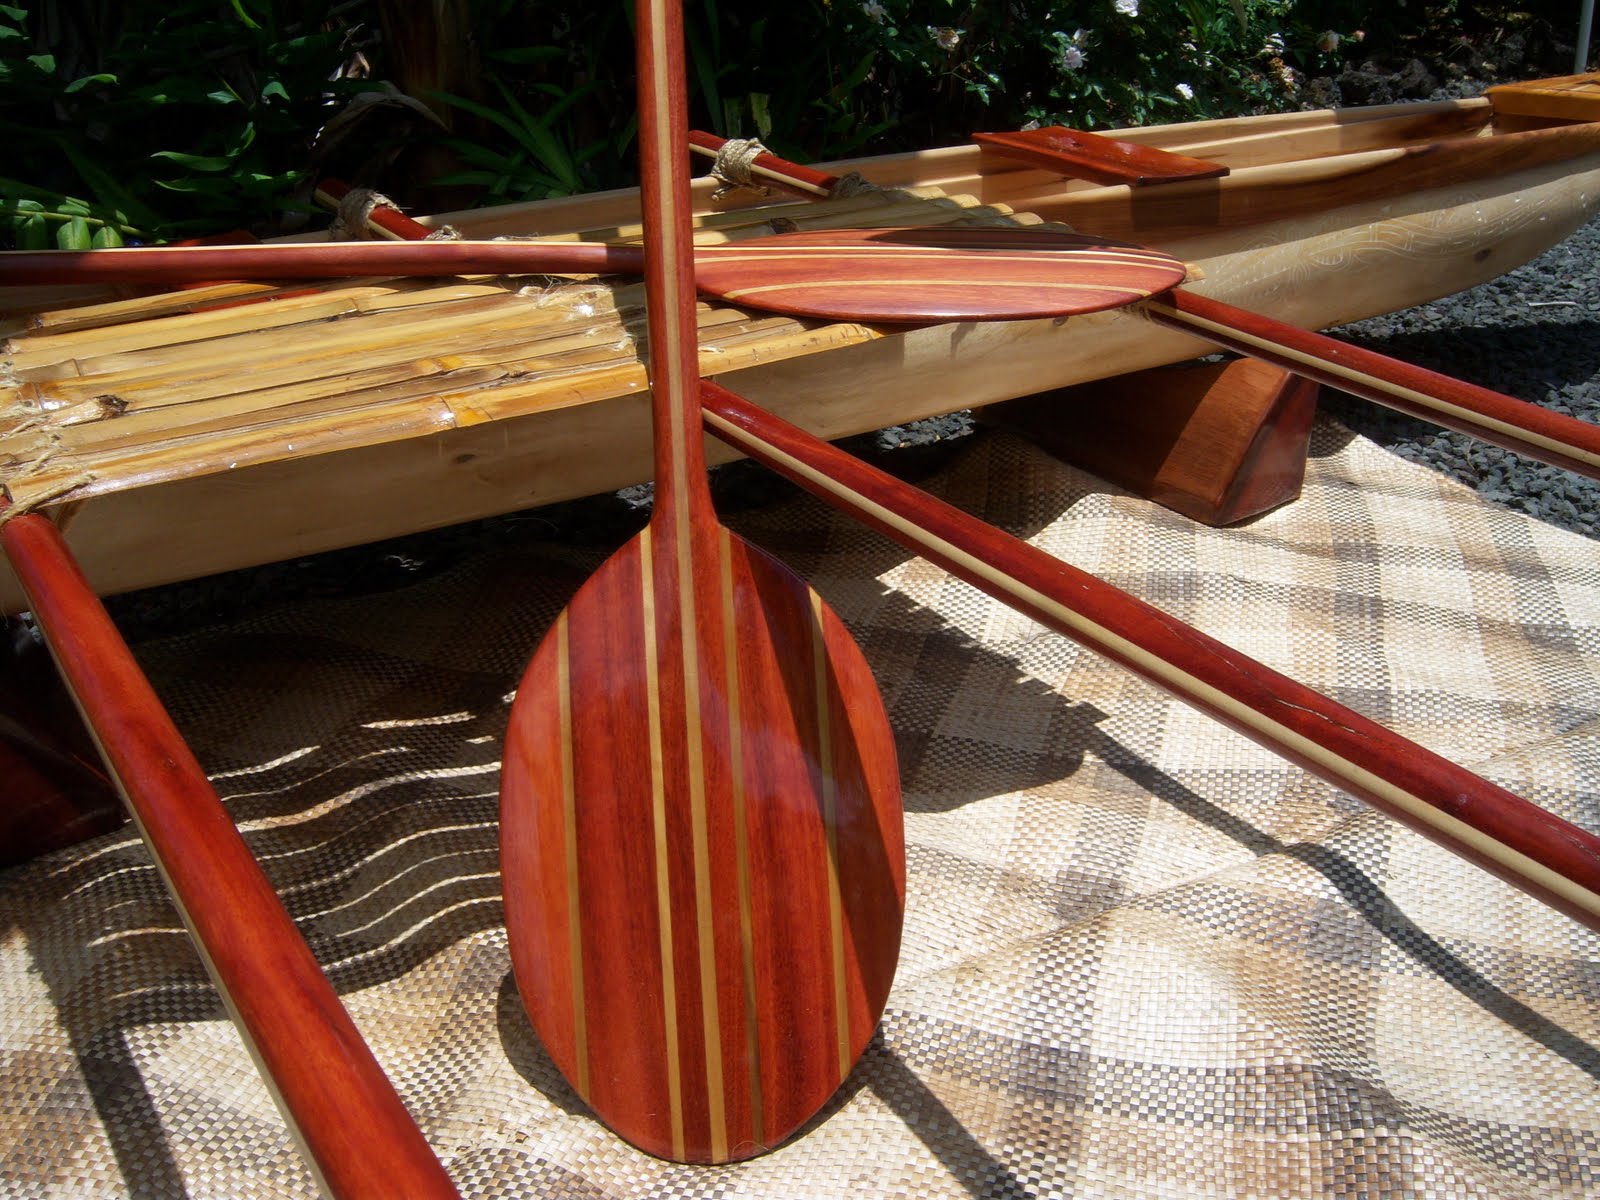  CA, Newport Beach CA, Laguna Beach CA: Outrigger Canoes For Sale